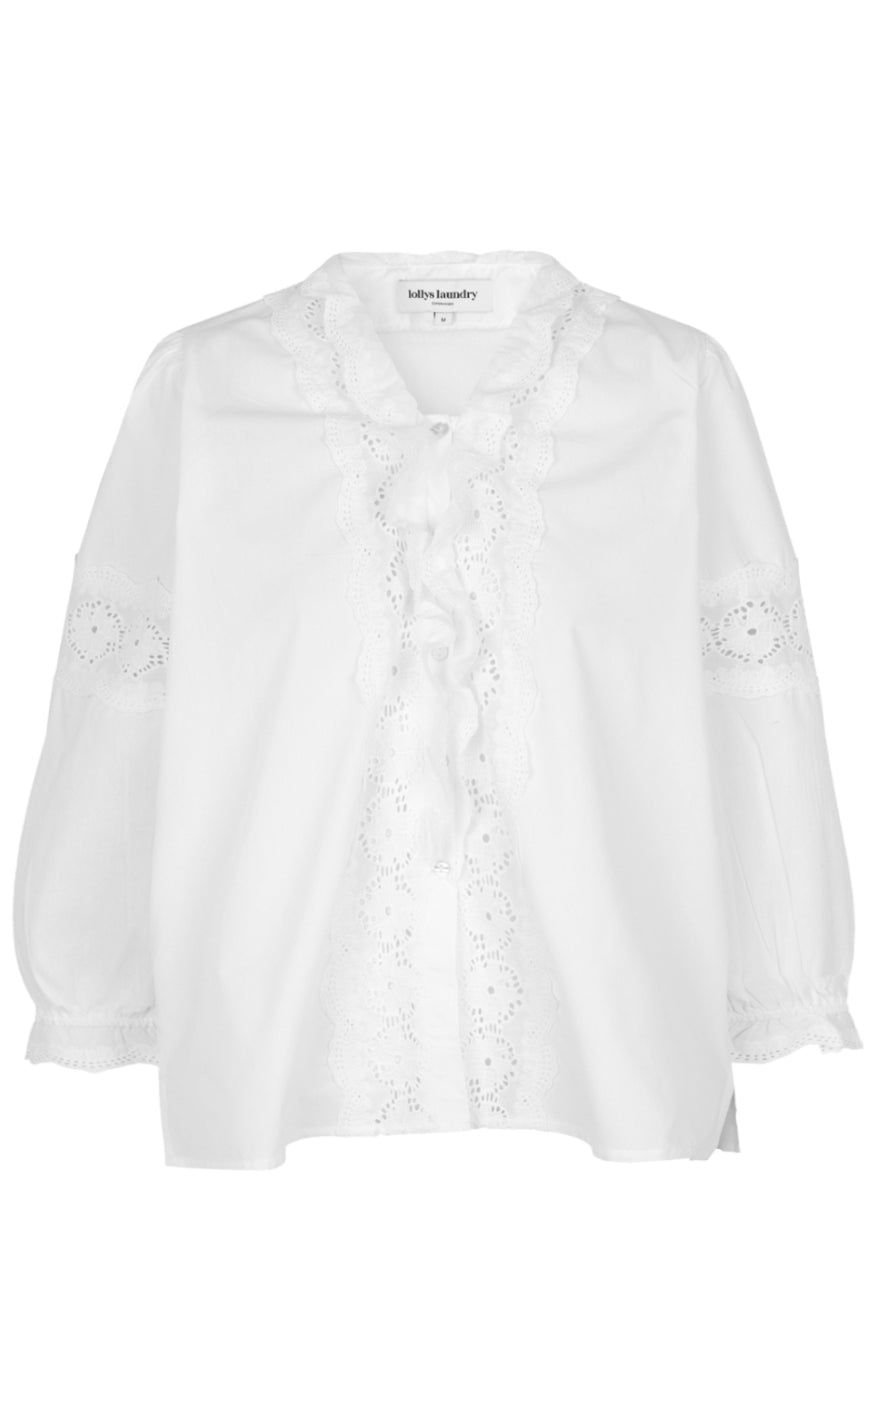 Se Lollys Laundry Skjorte - Pavia - White hos Fashionbystrand